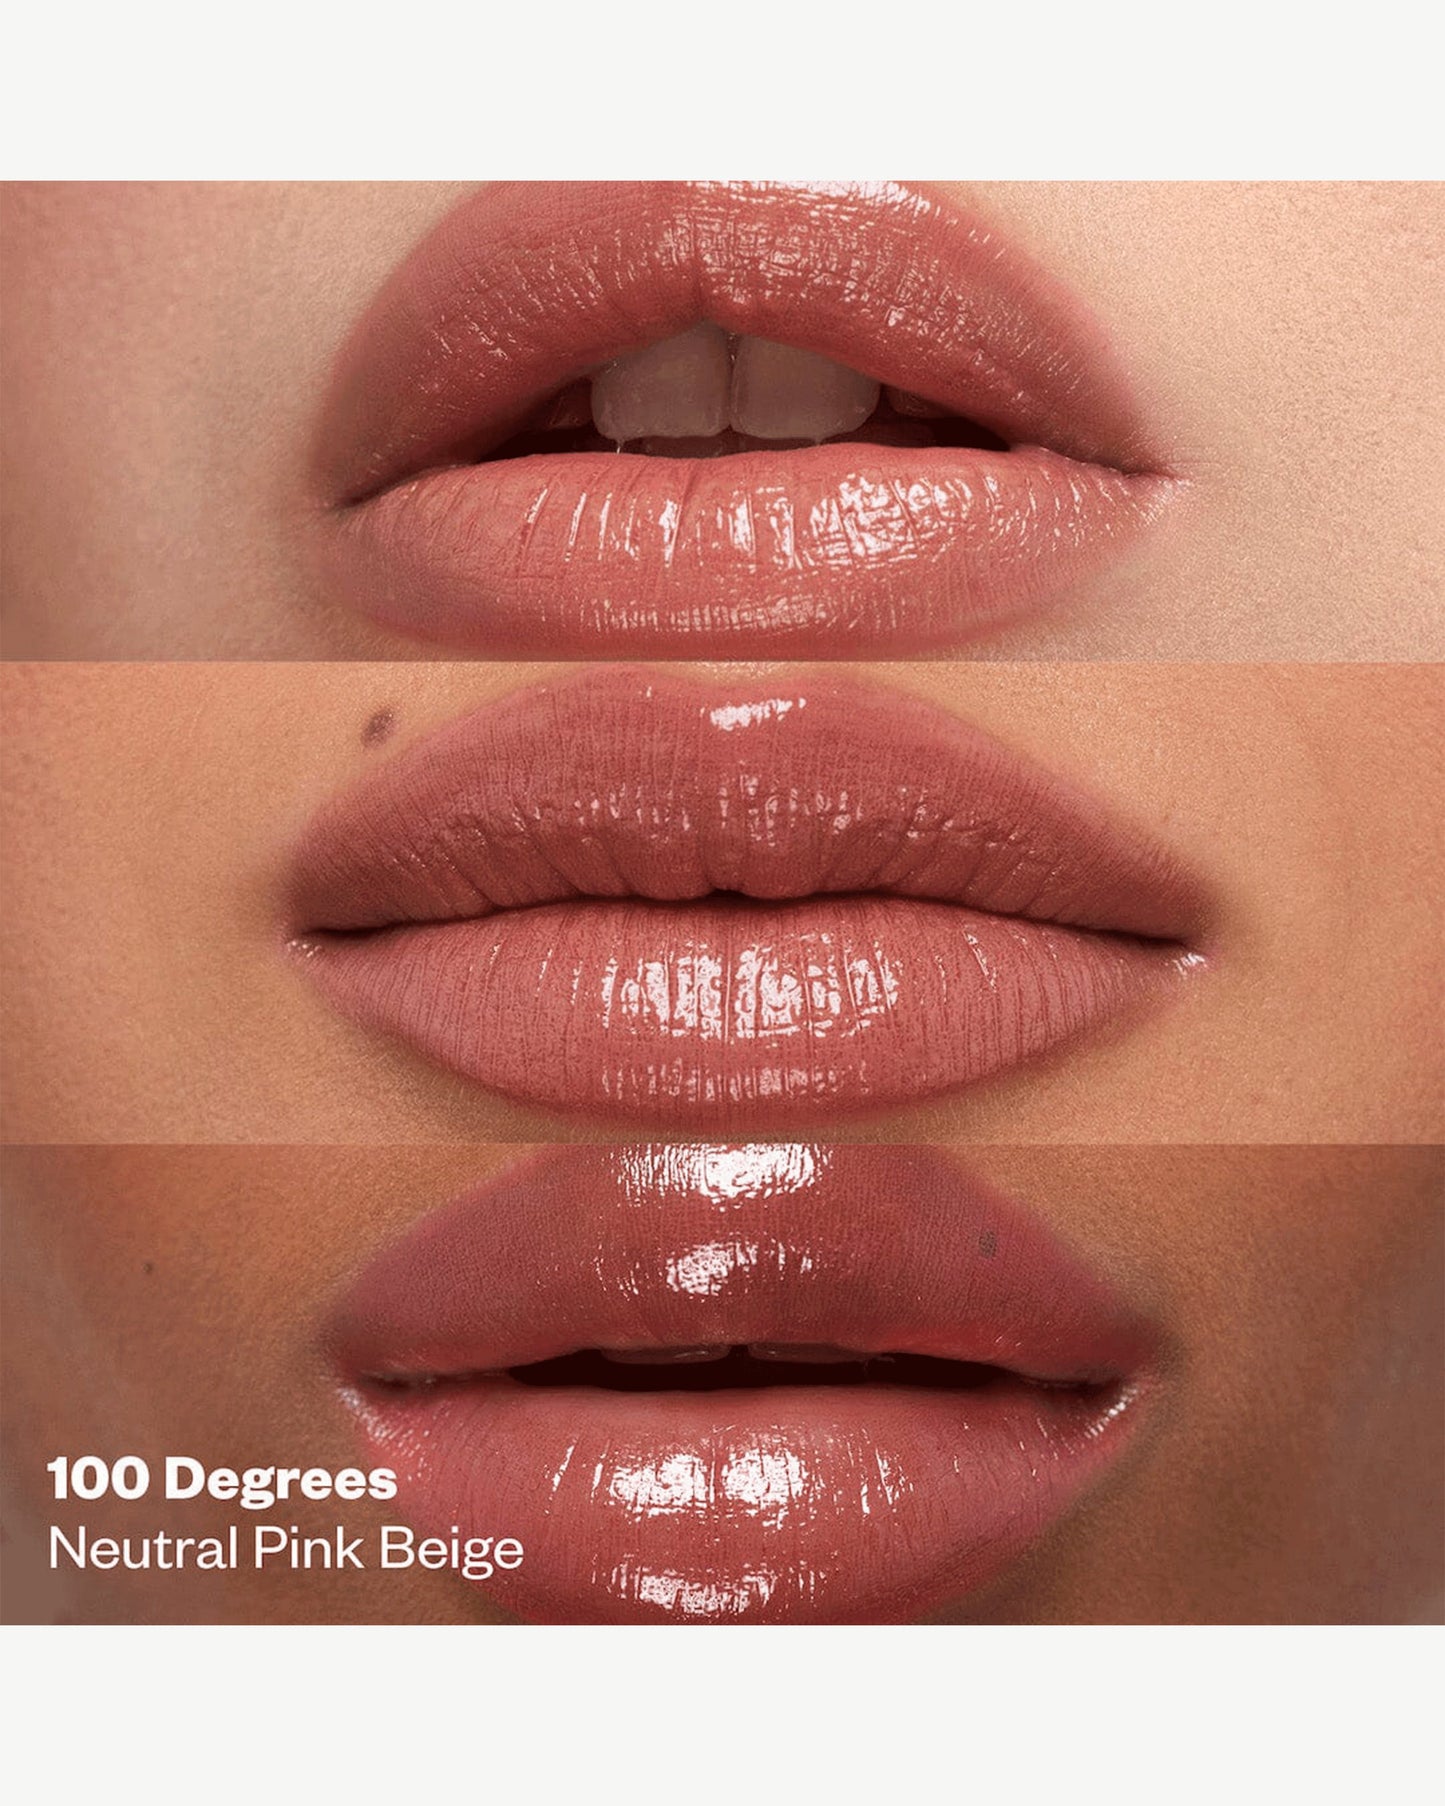 100 Degrees (neutral pink beige)